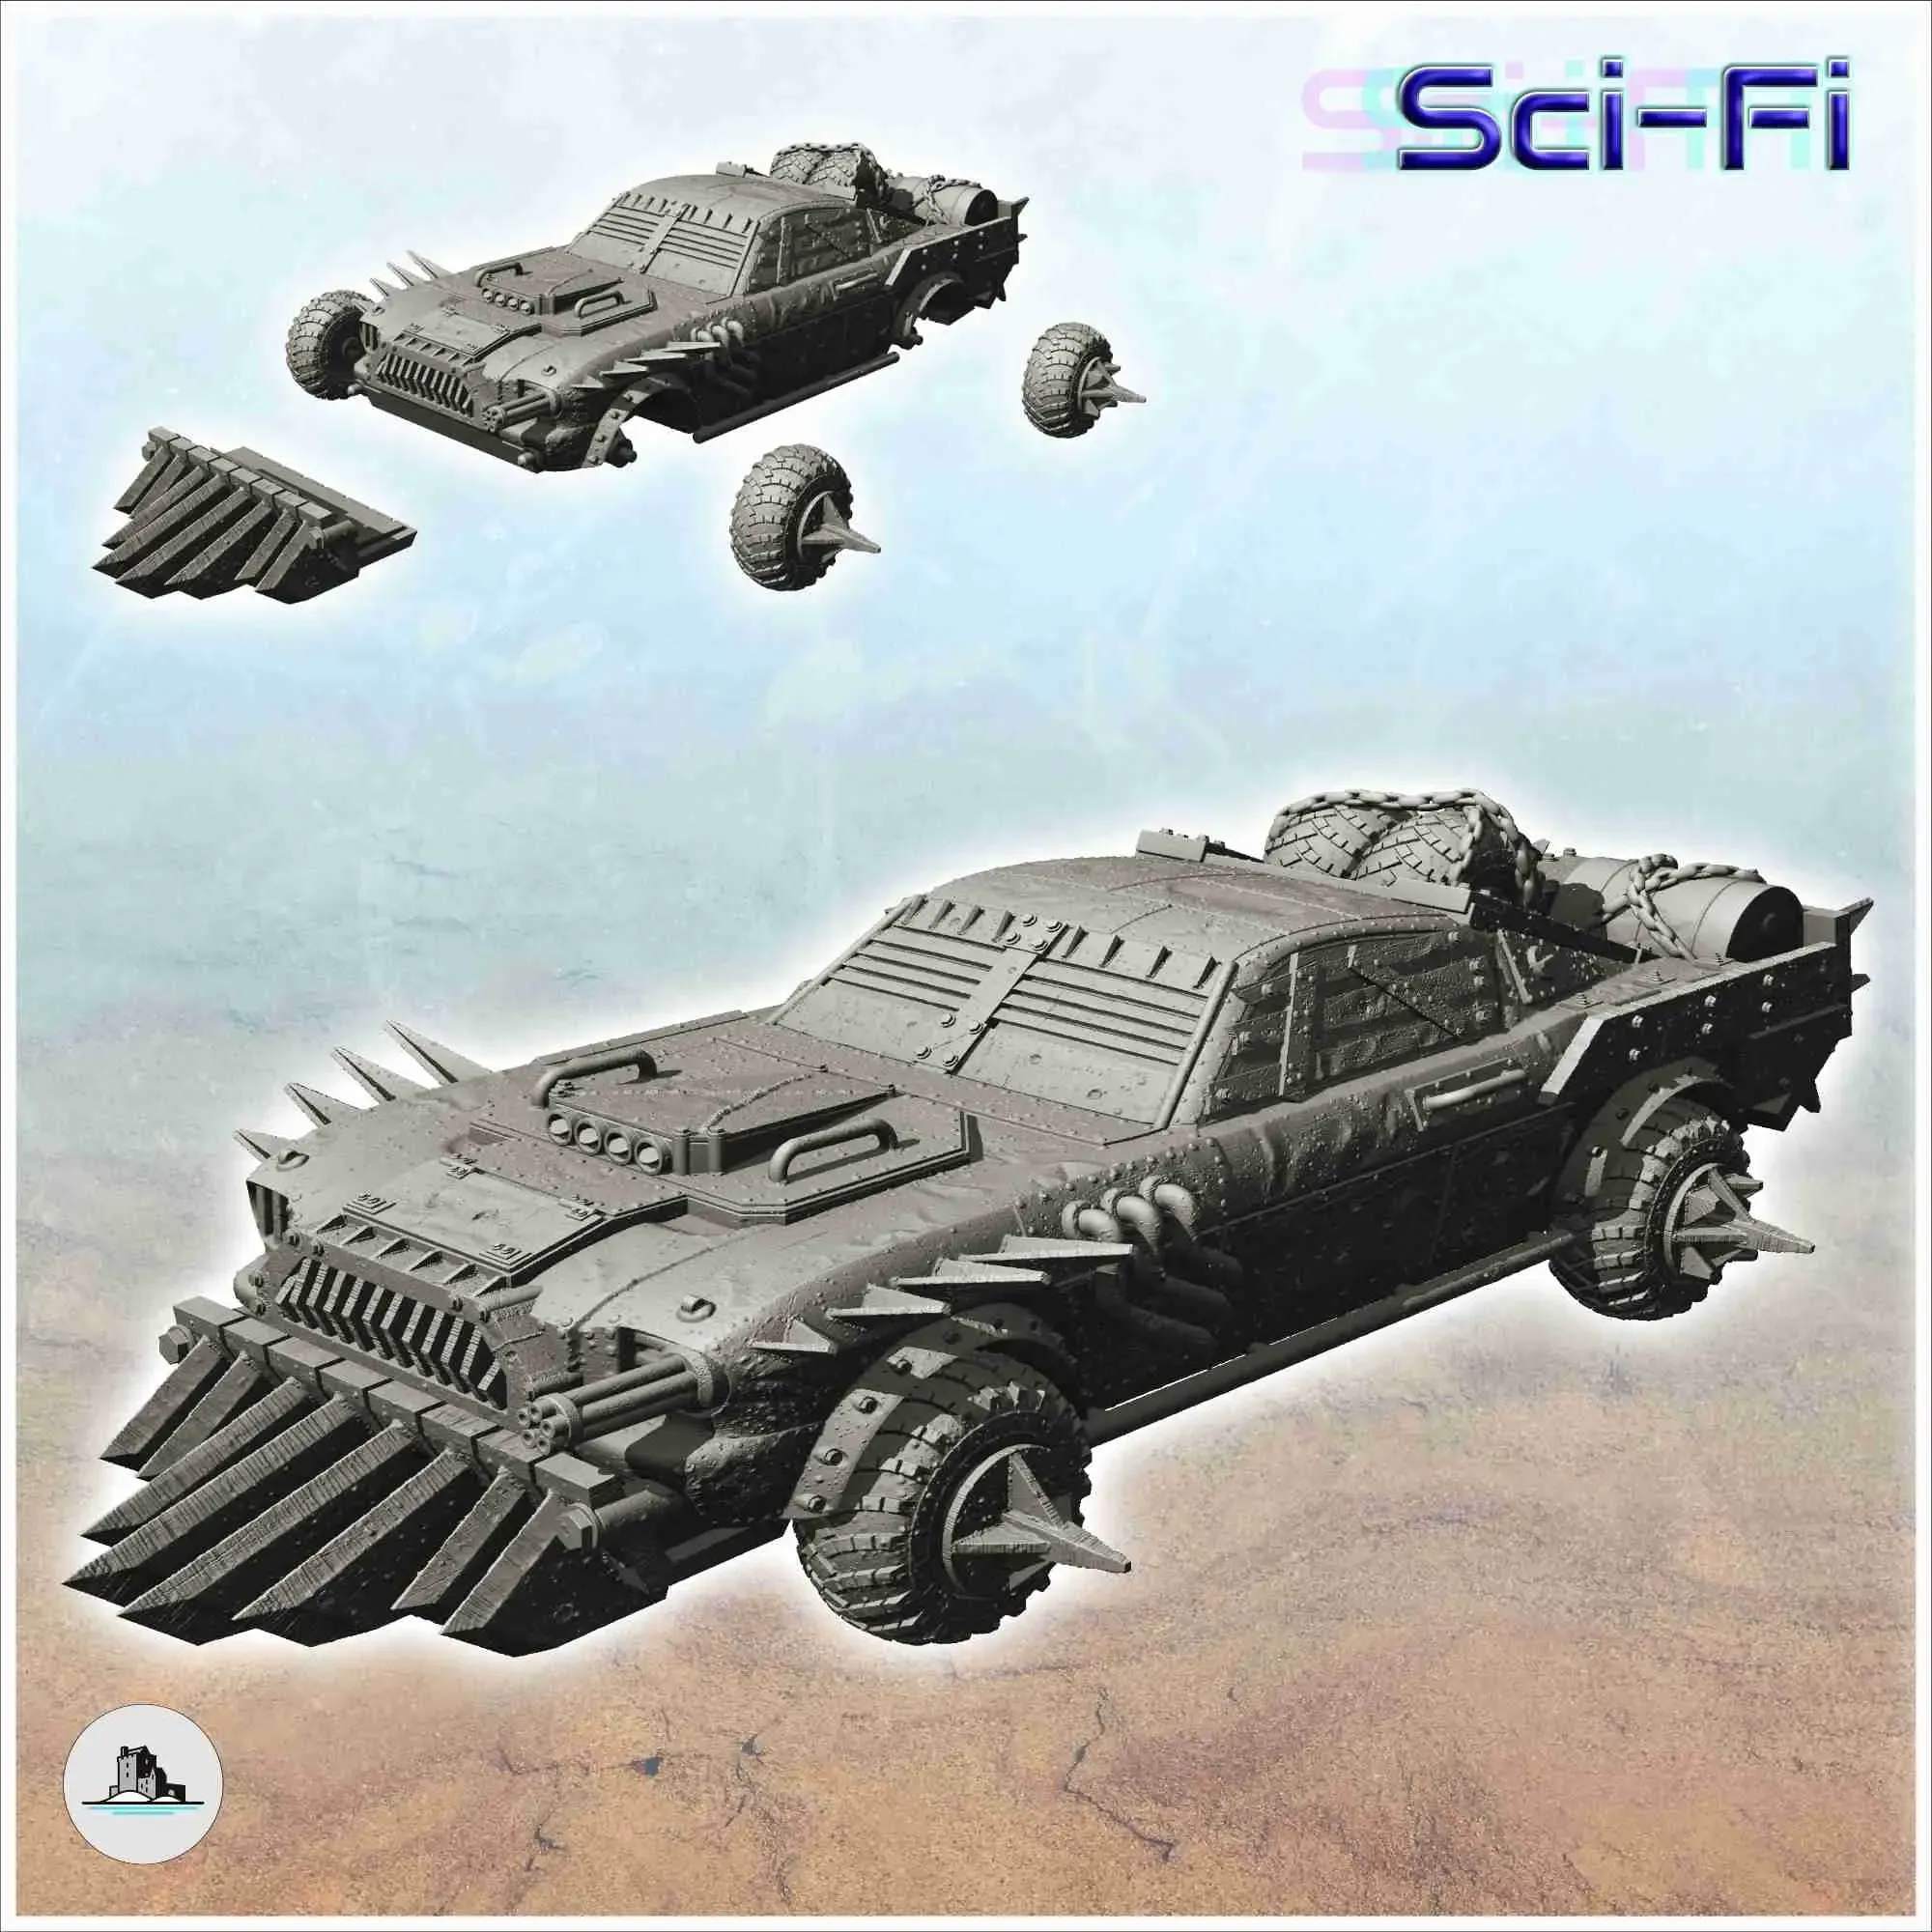 Post-apo car with spikes and machine gun (16) - sci-fi scien